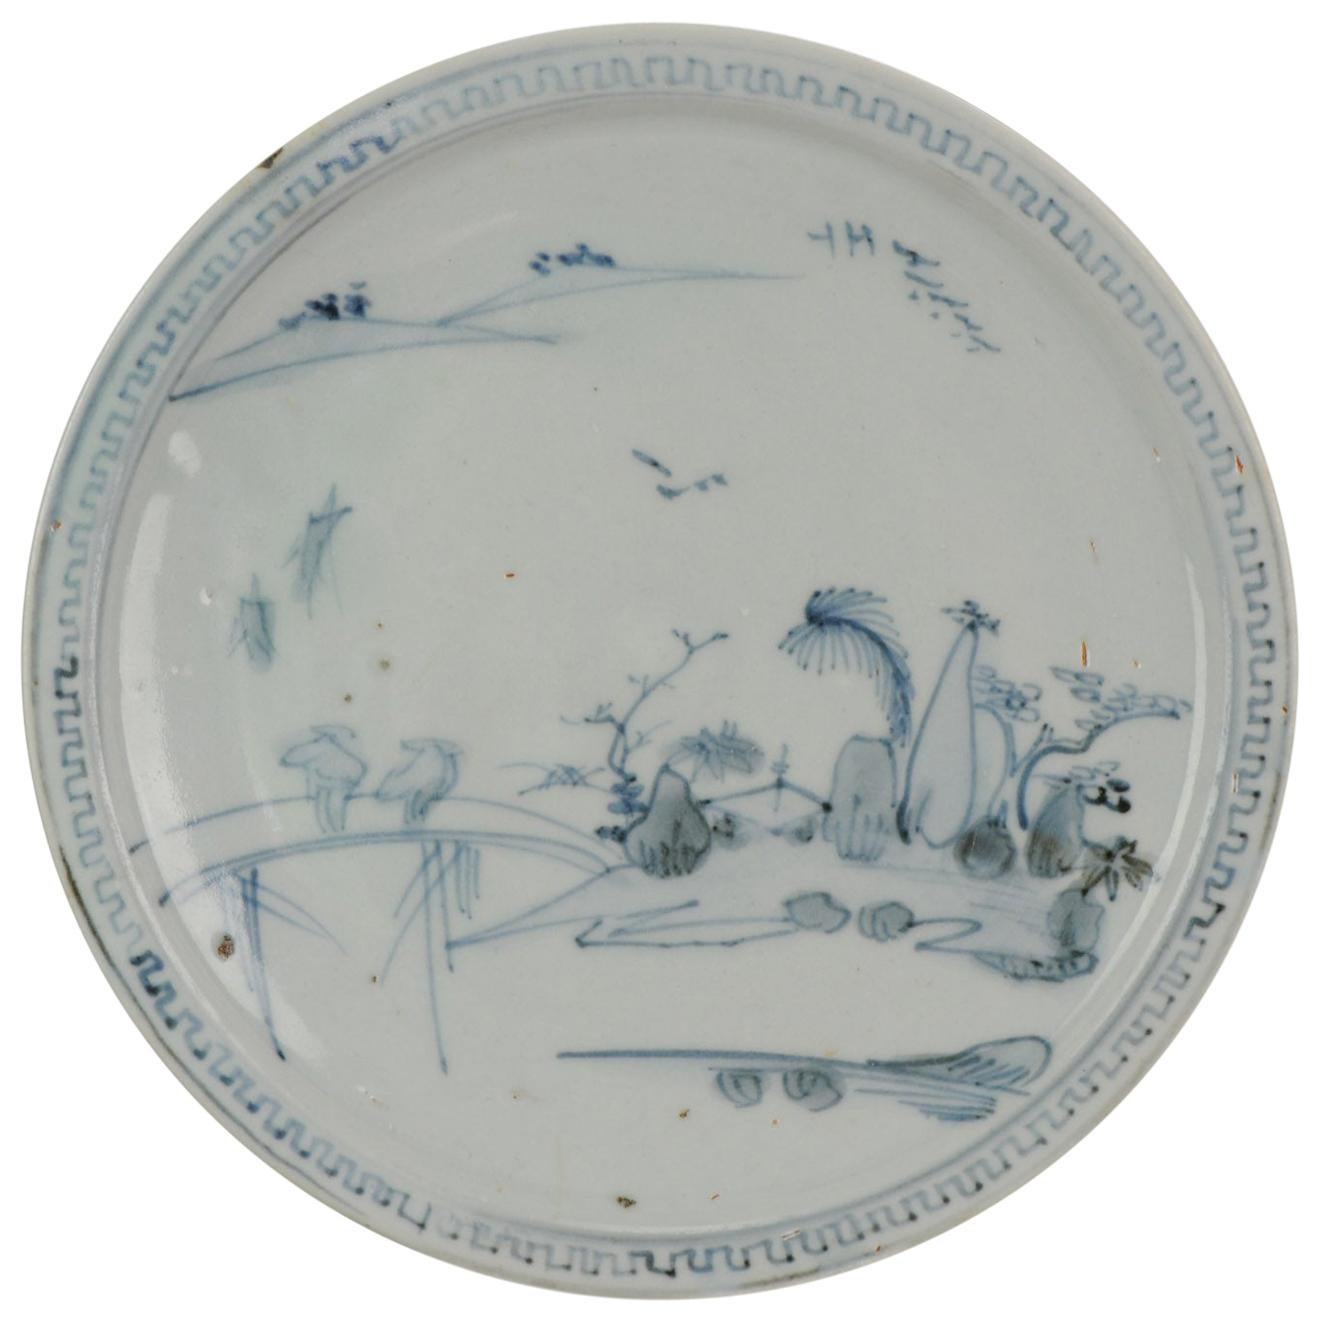 Antique Japanese Shoki Imari Plate circa 1630-1640 Arita Japan Porcelain